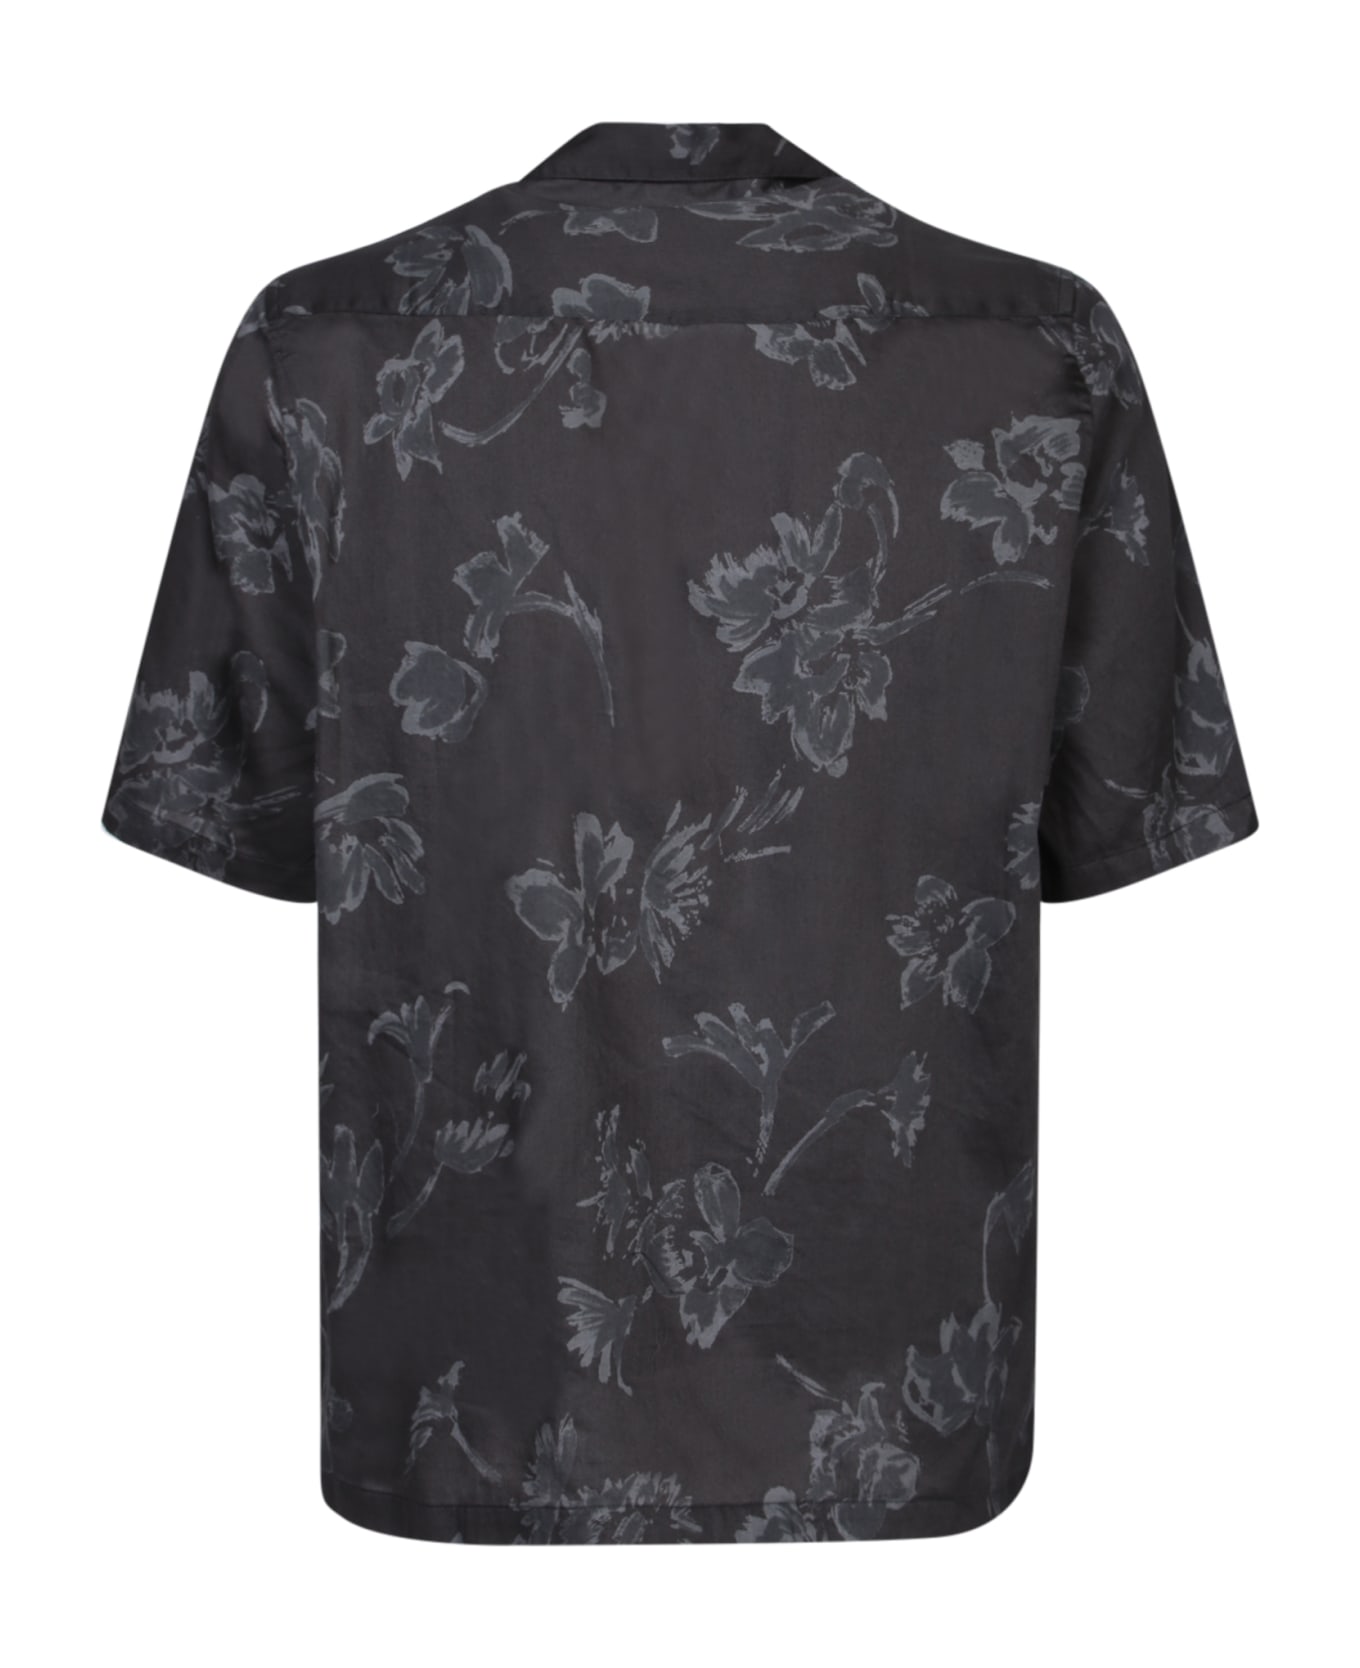 Officine Générale Short Sleeves Black/grey Shirt - Black